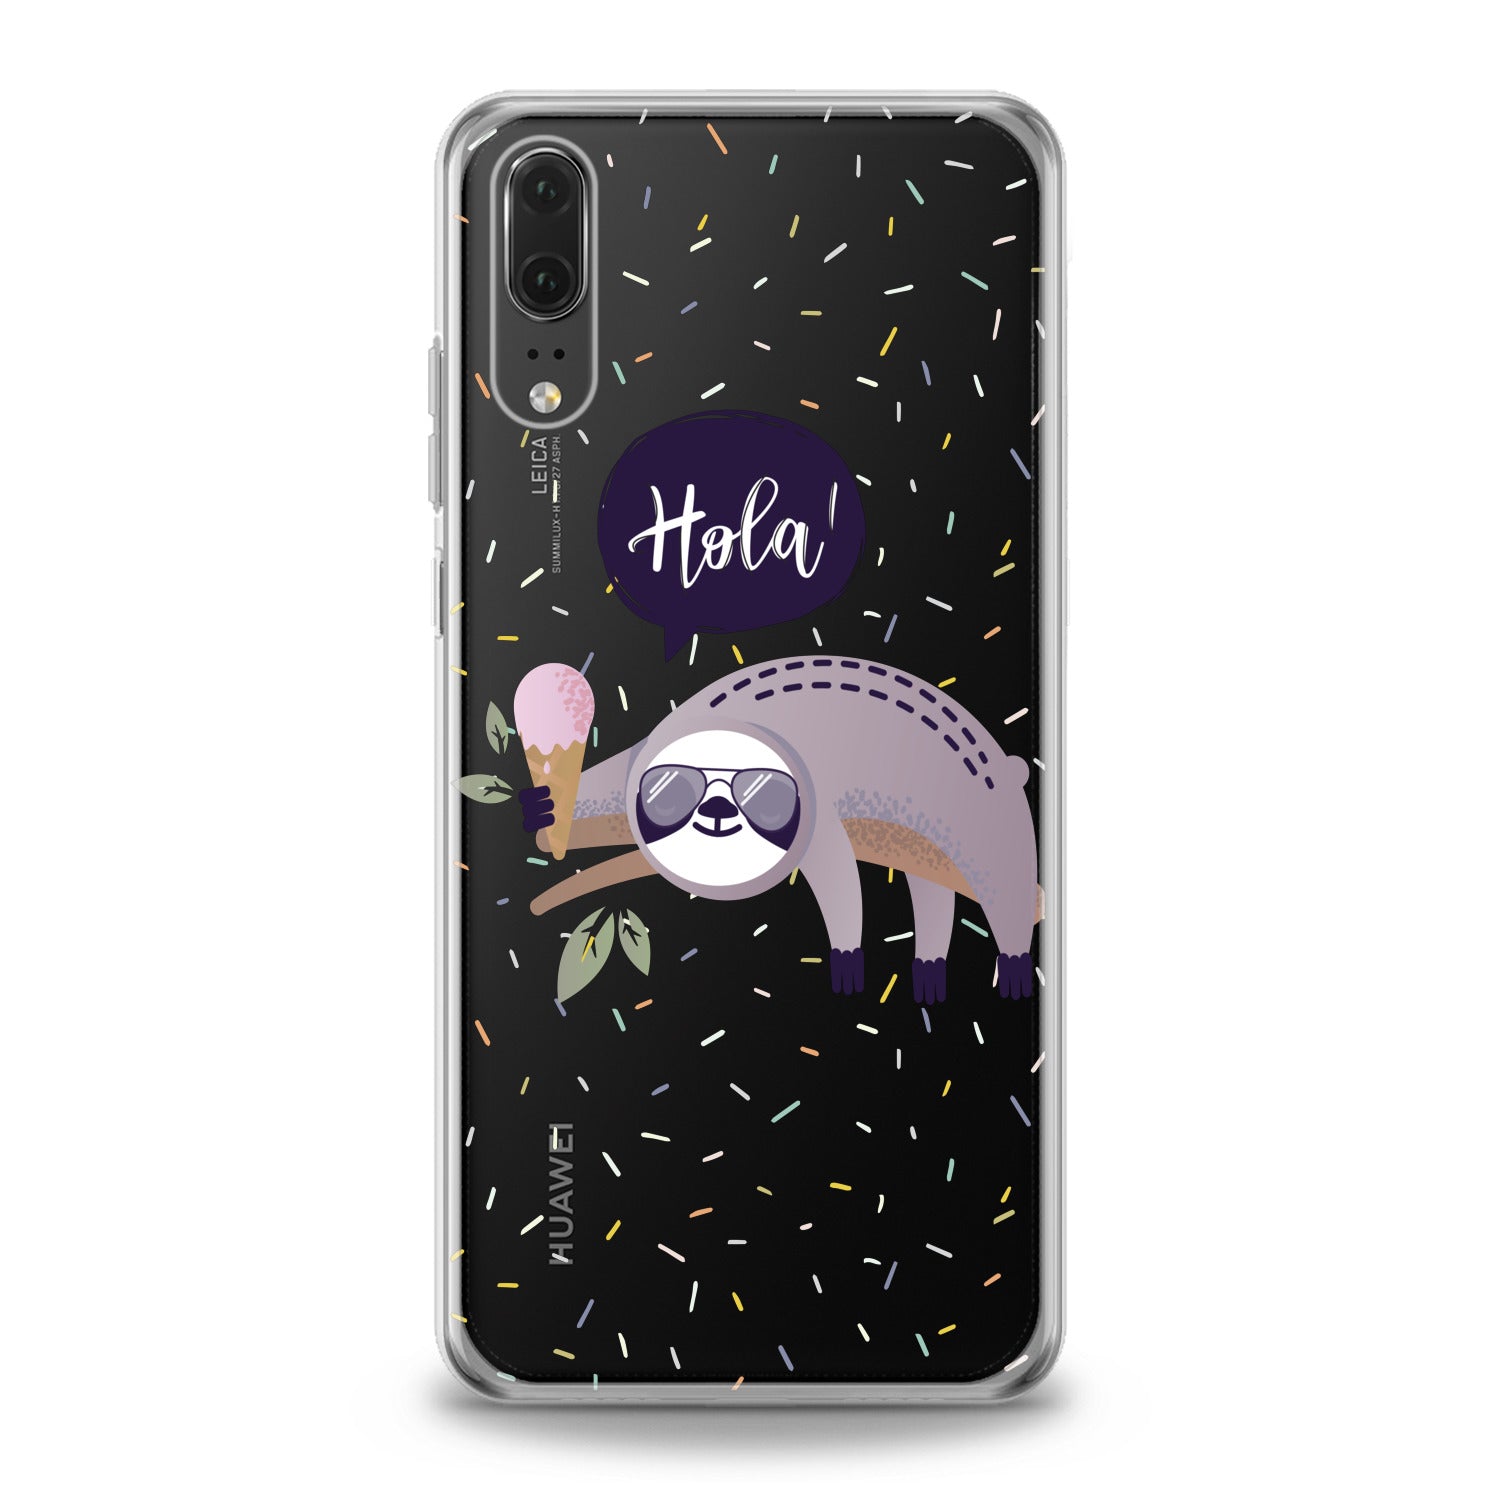 Uitdrukkelijk spannend Ga lekker liggen Lex Altern TPU silicone Huawei Honor case for your phone with unique design!